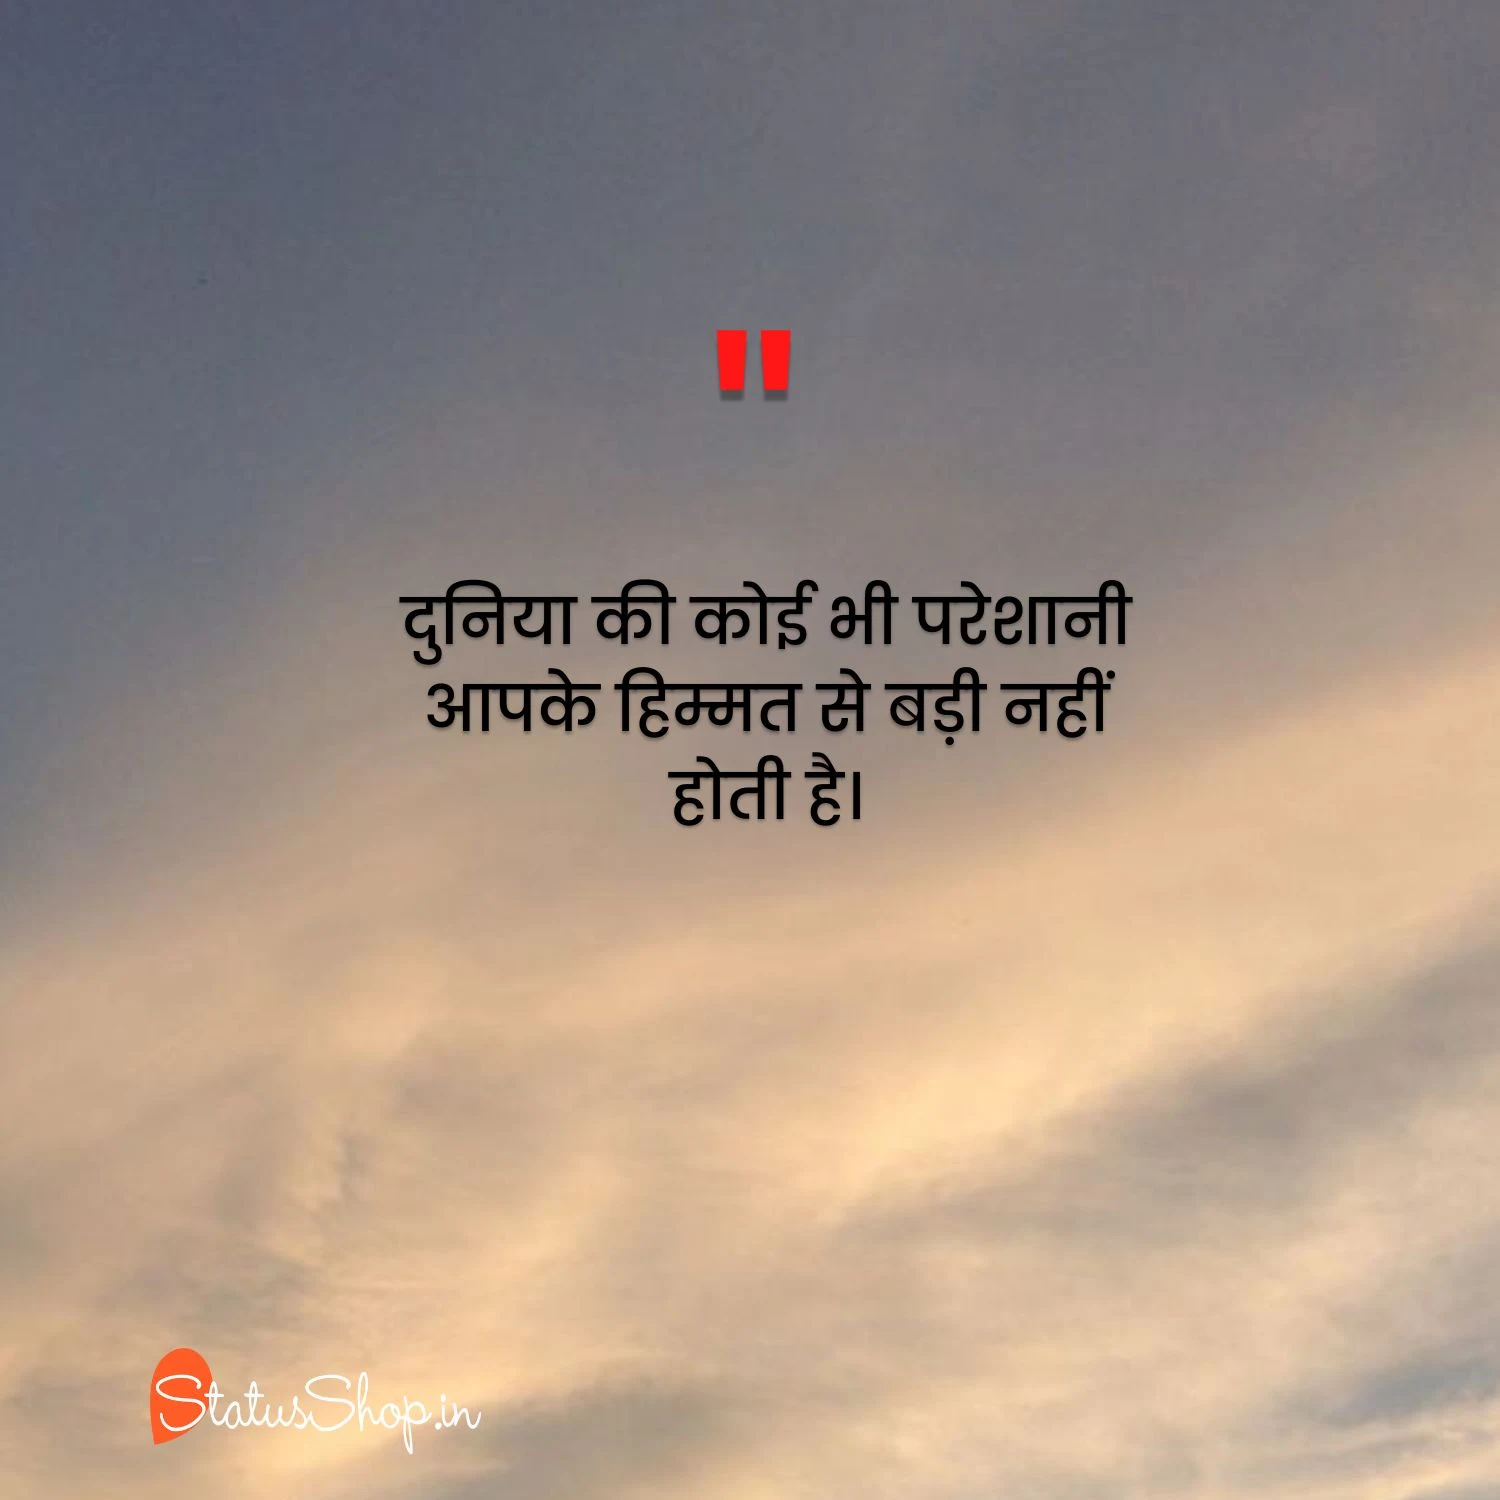 Struggle-Motivational-Quotes-In-Hindi